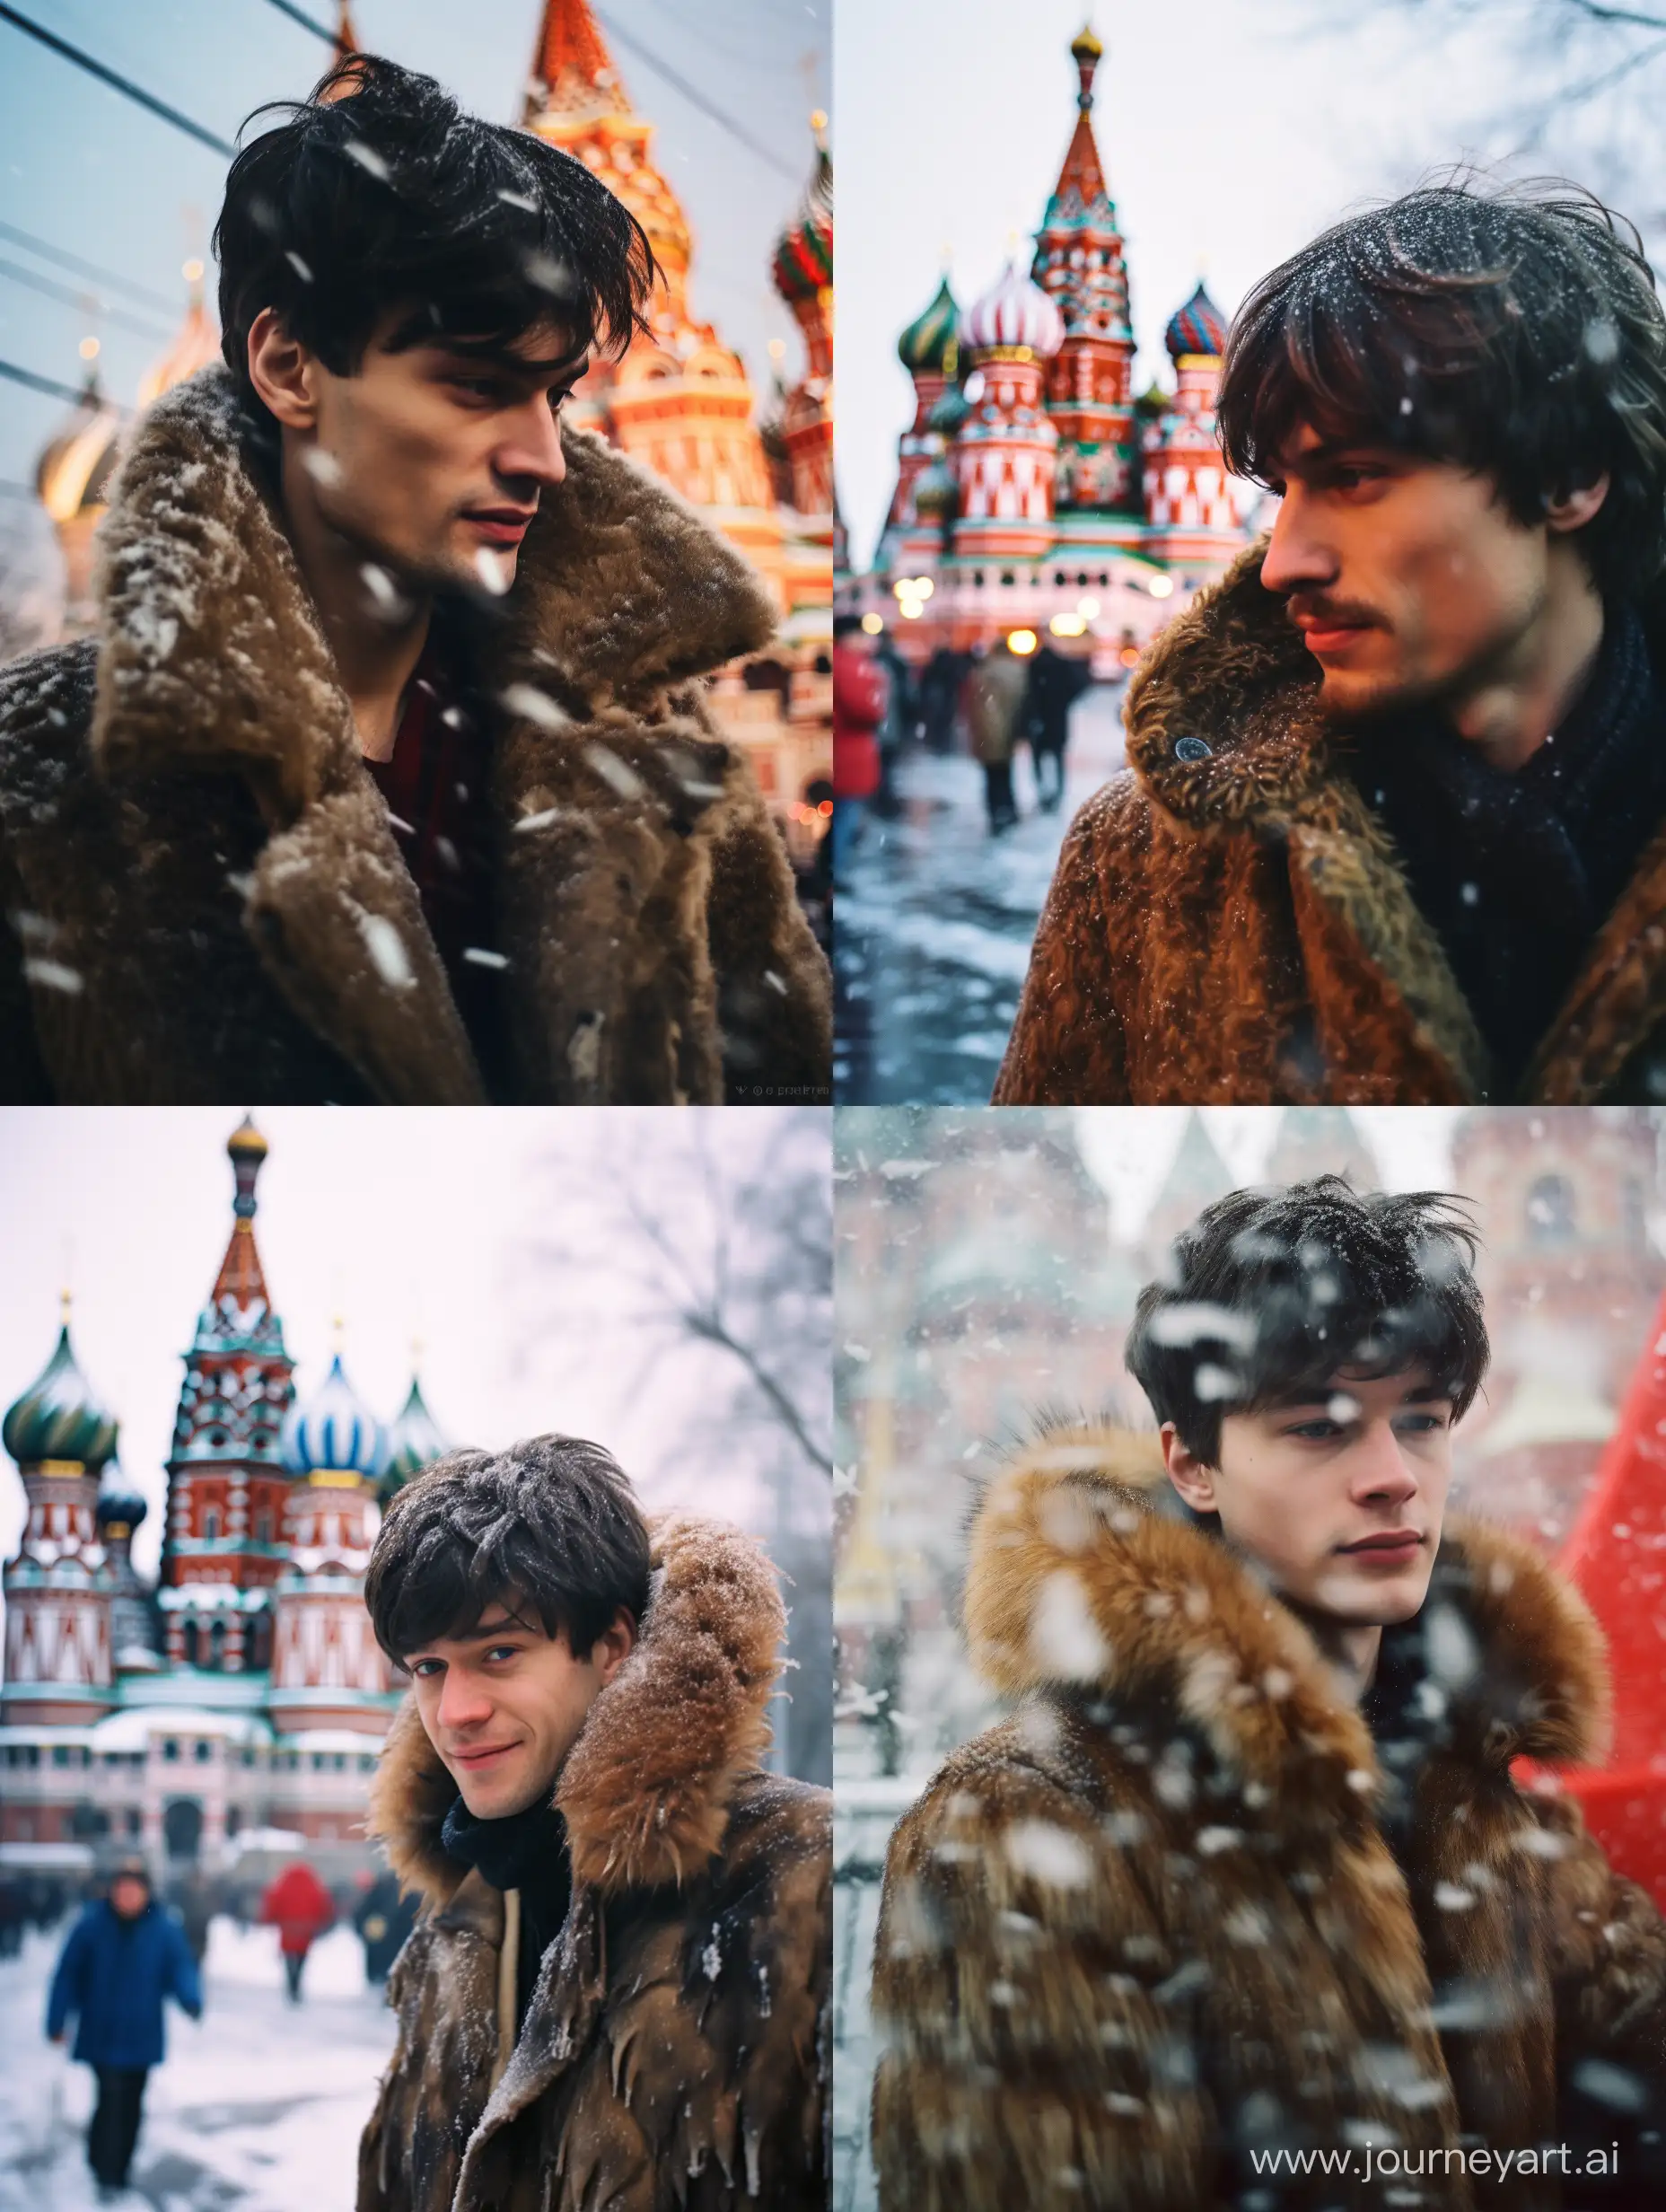 Snowy-Winter-Fashion-Stylish-Man-in-Sovietera-Fur-Hat-on-Red-Square